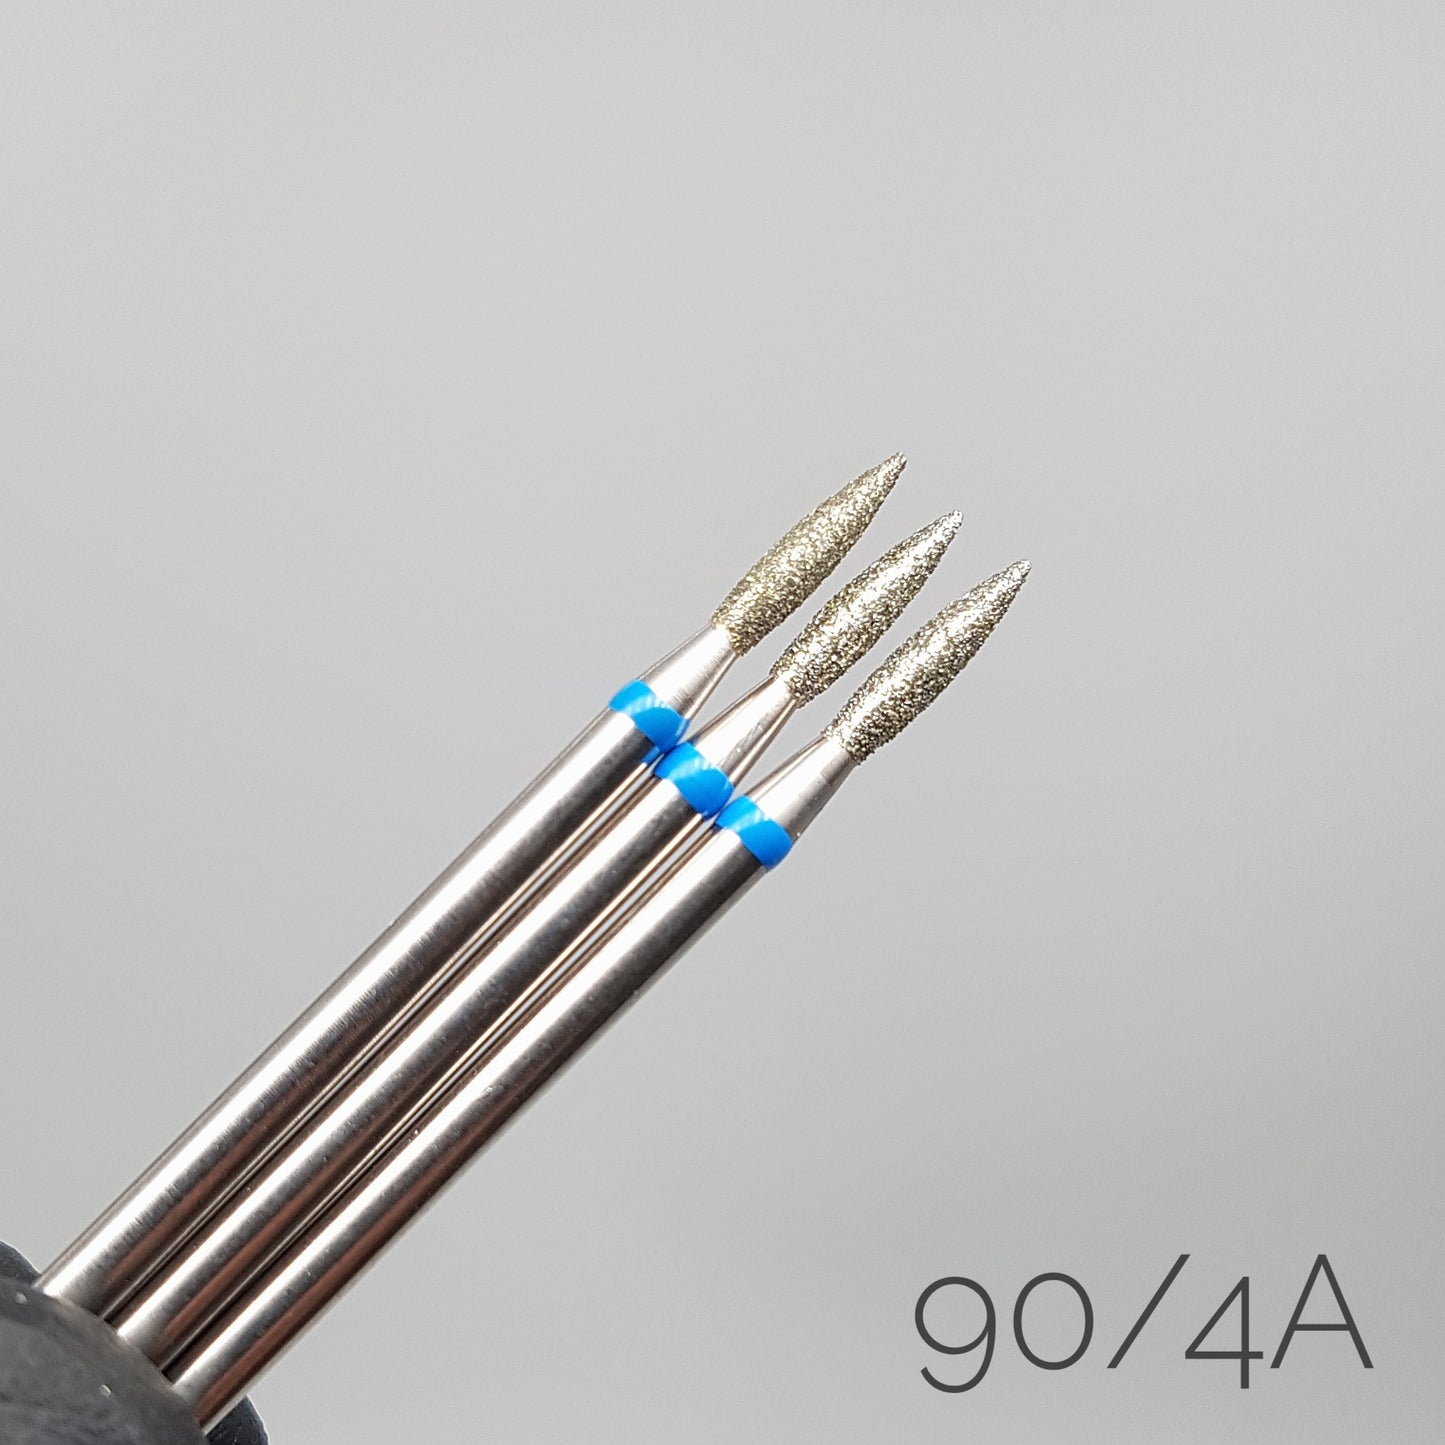 Fresa de diamante Llama con punta. Azul, 2.1mm. 90/4A